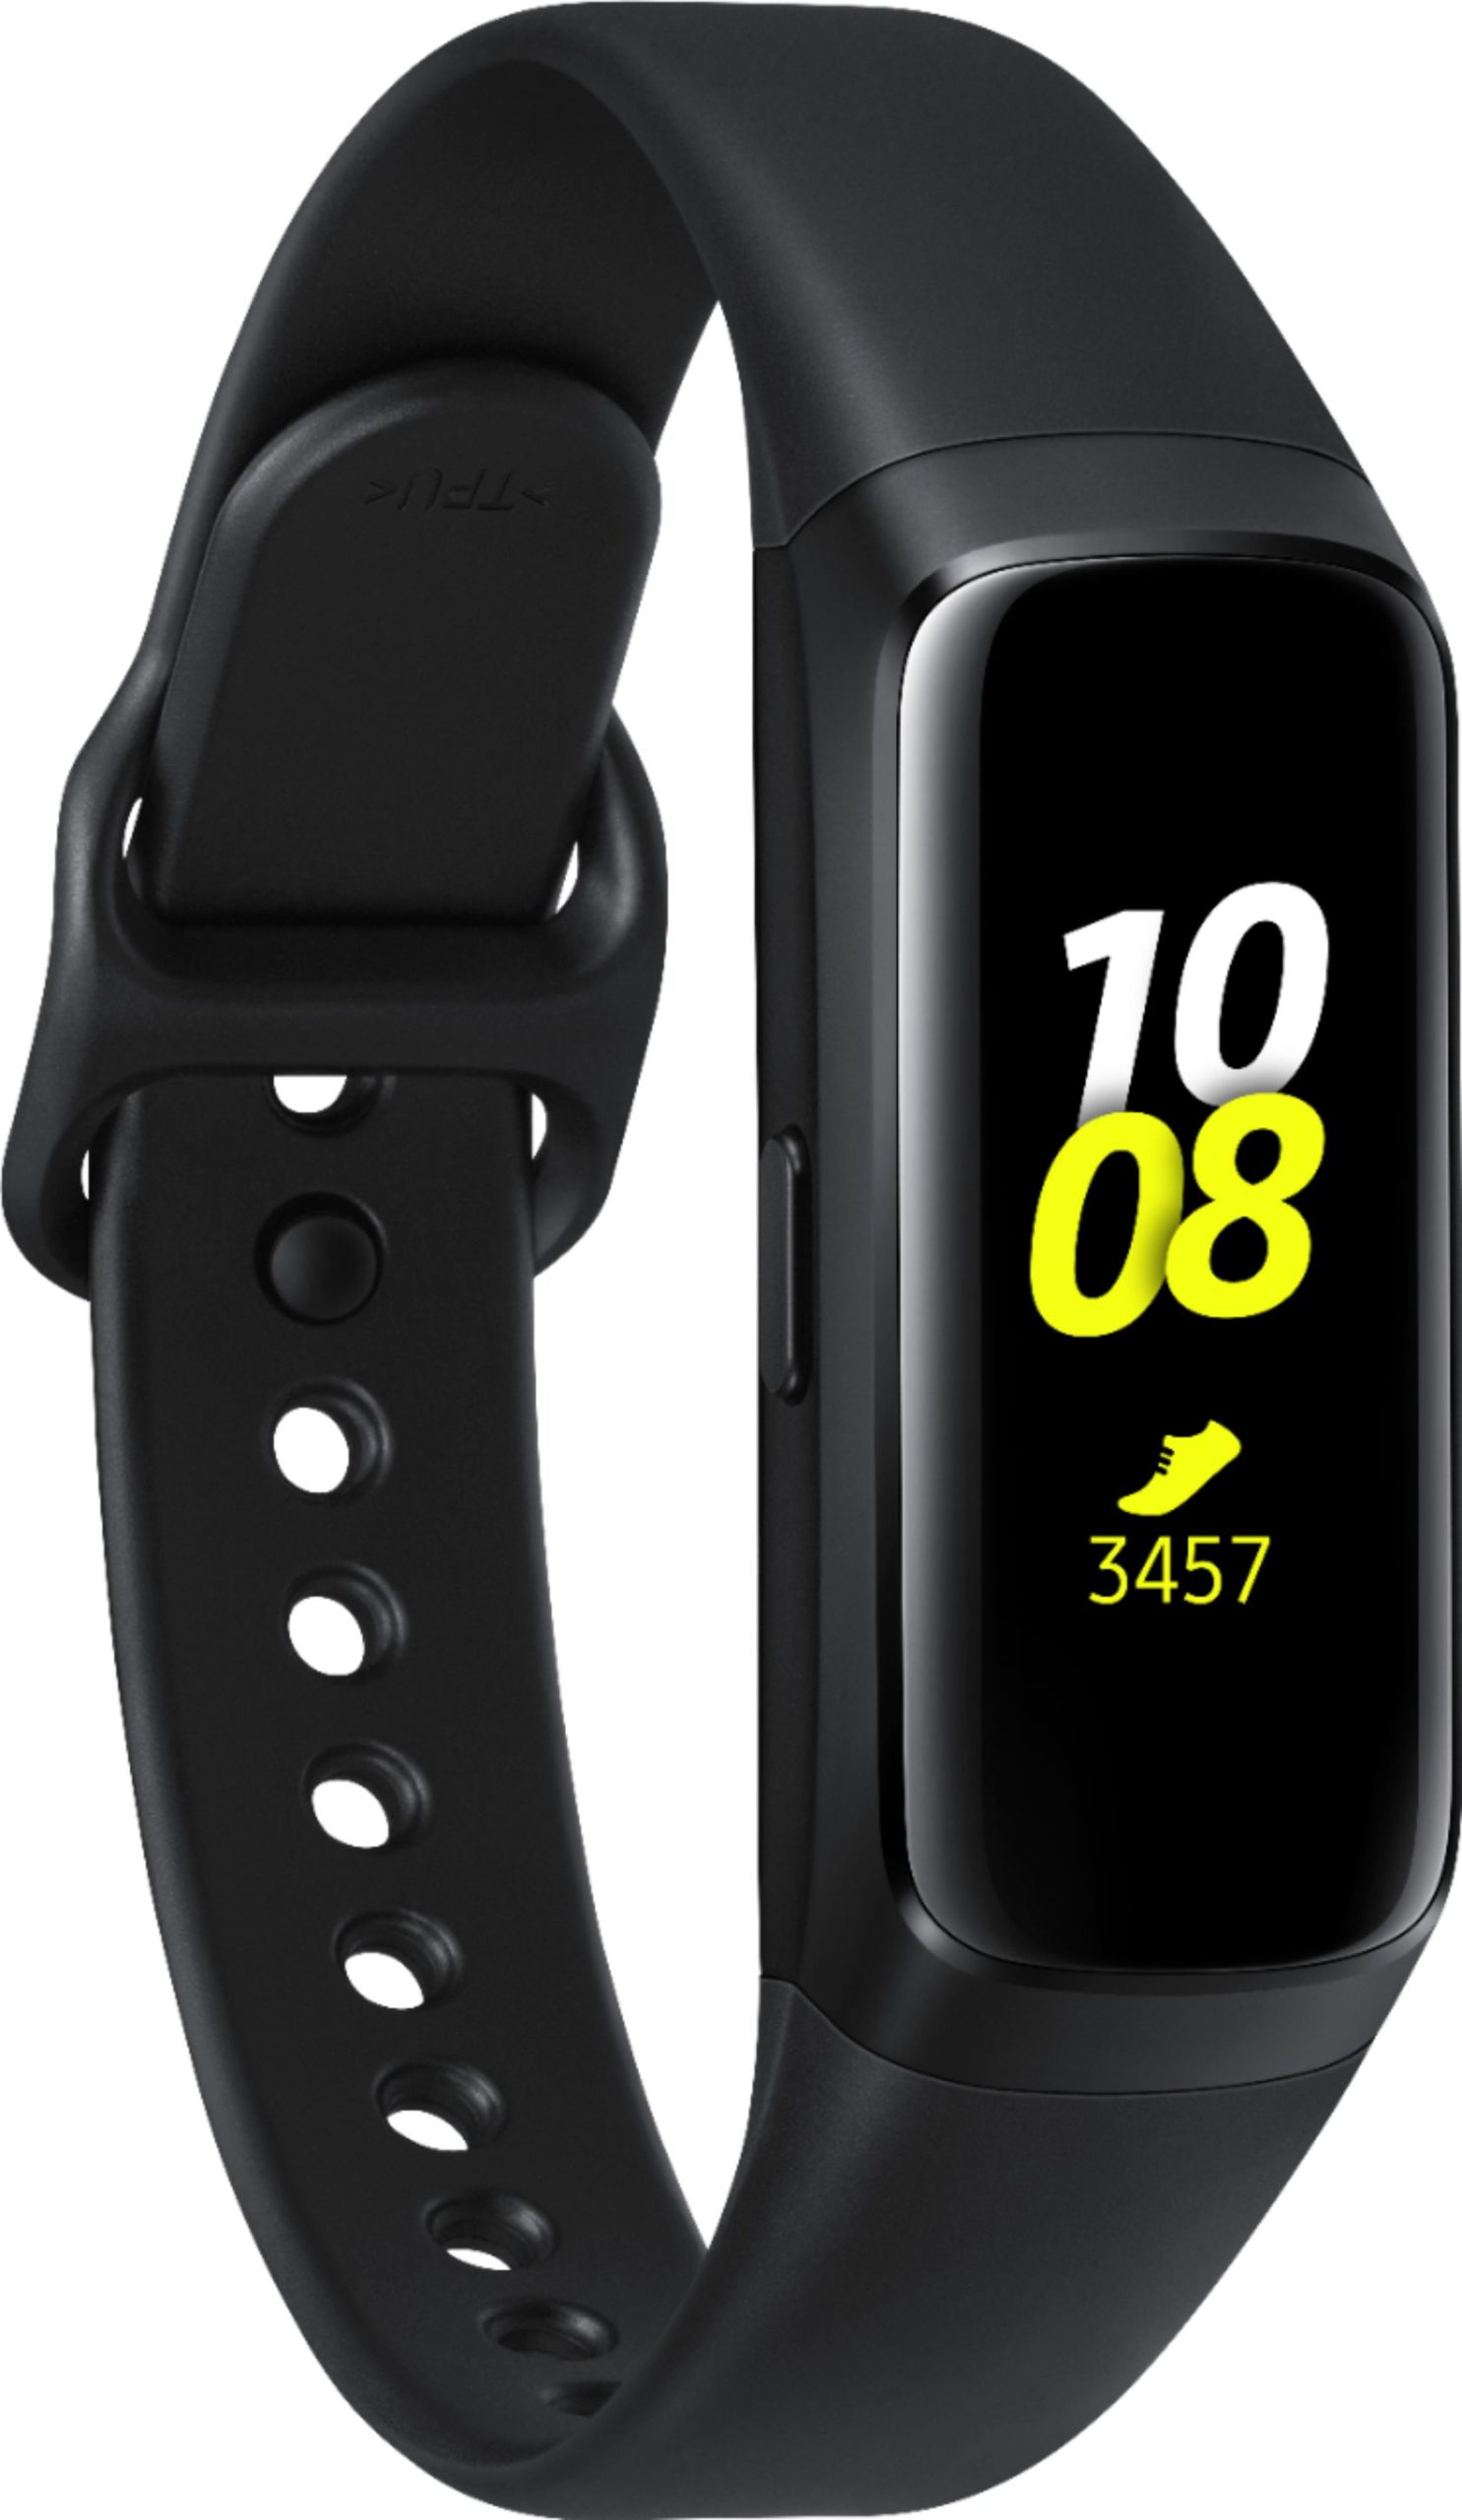 Samsung Gear Fit Smartwatch & Fitness Activity Tracker